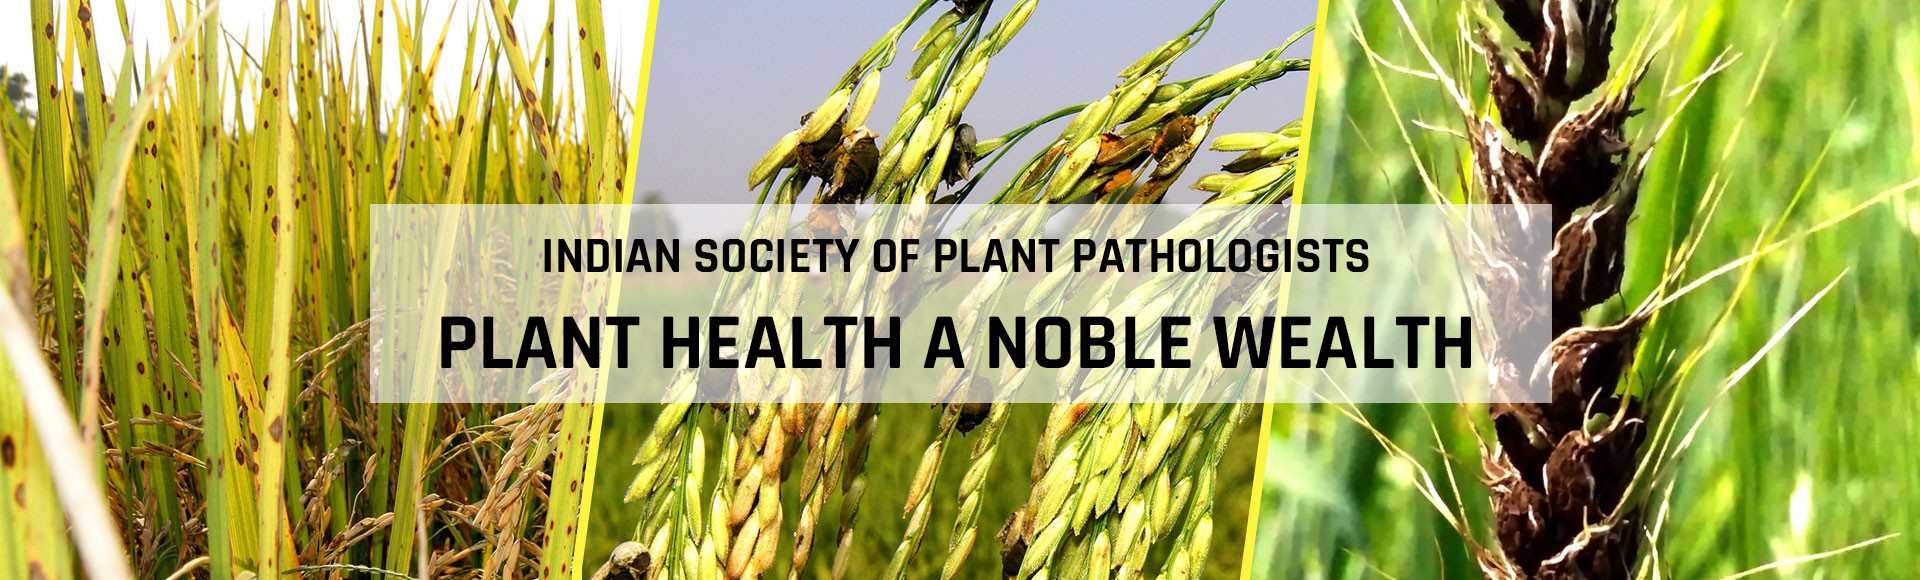 Indian Society of Plant Pathologists